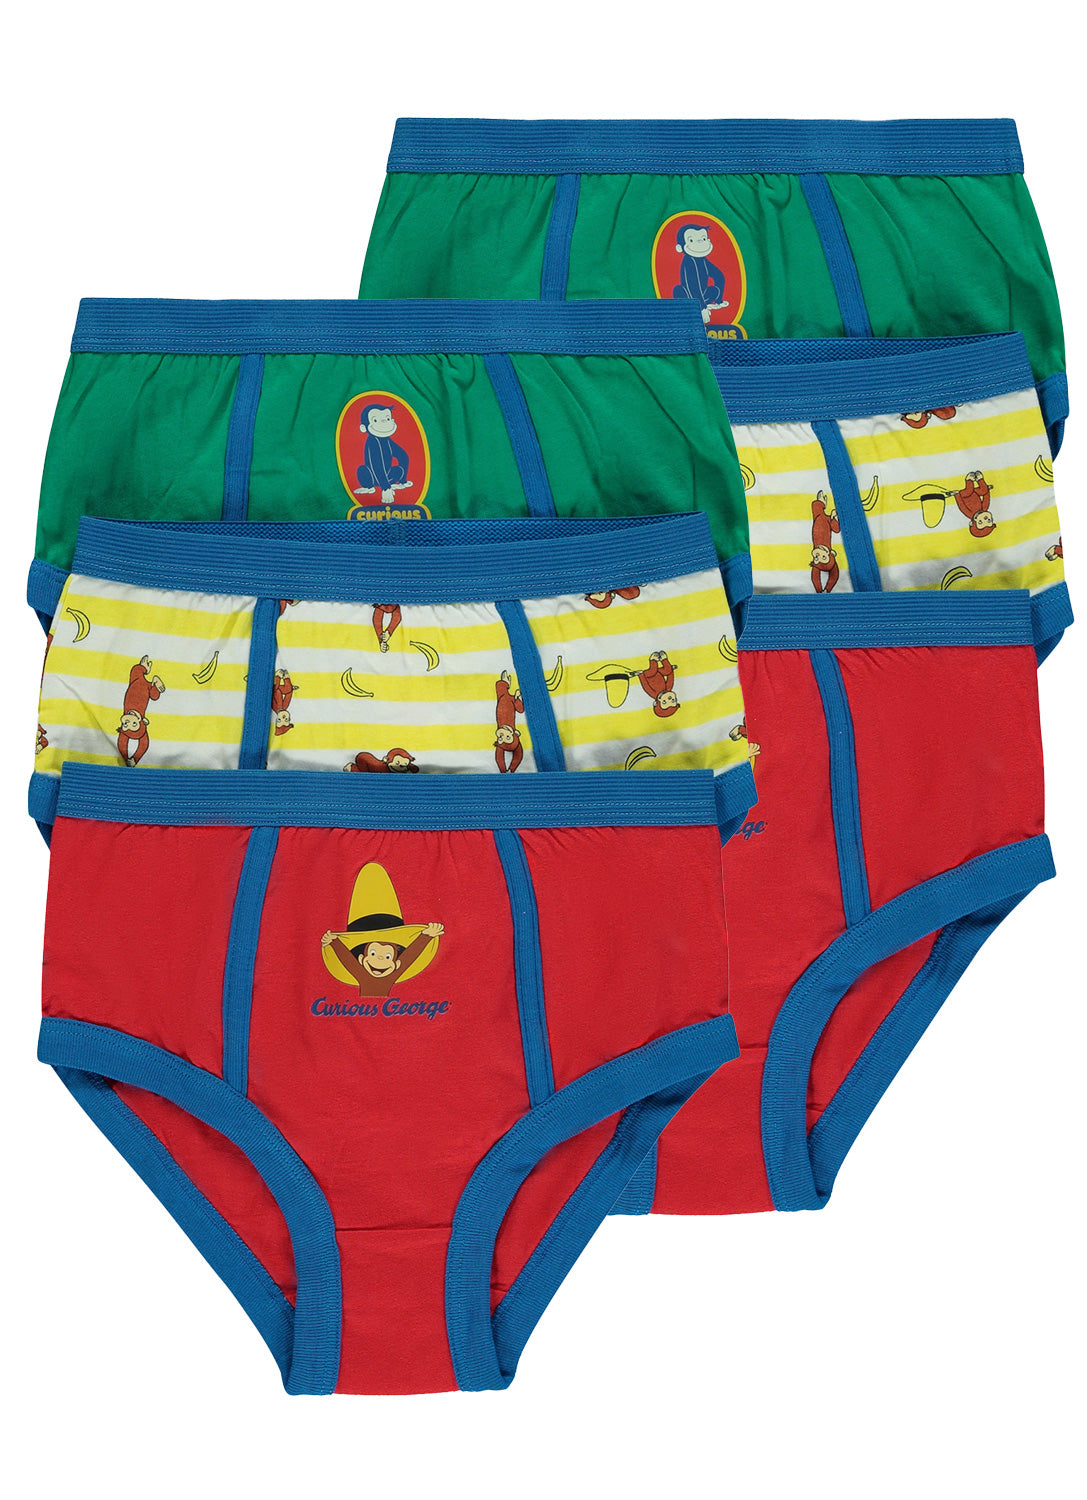 Boys Curious George Cotton Underwear - 6 Pack